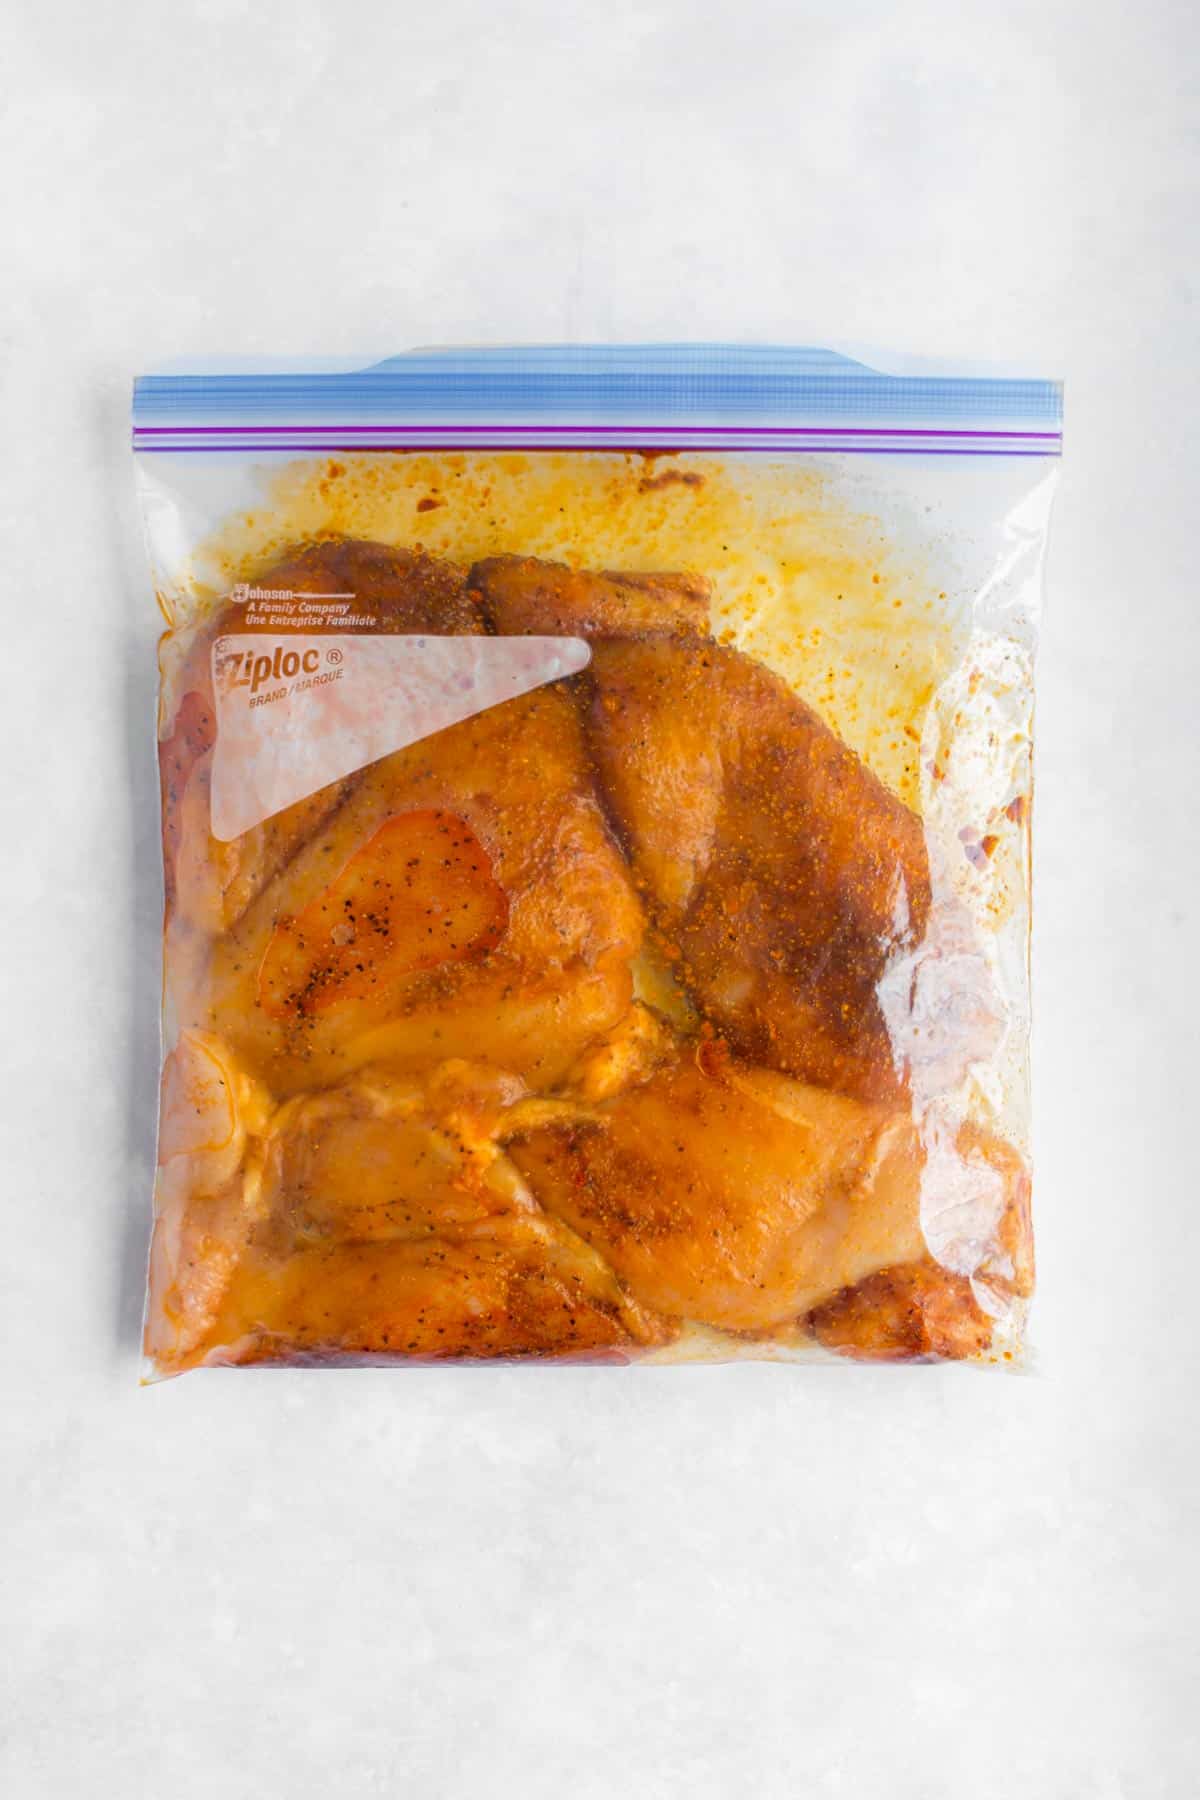 Marinaded chicken breasts in a ziploc bag.